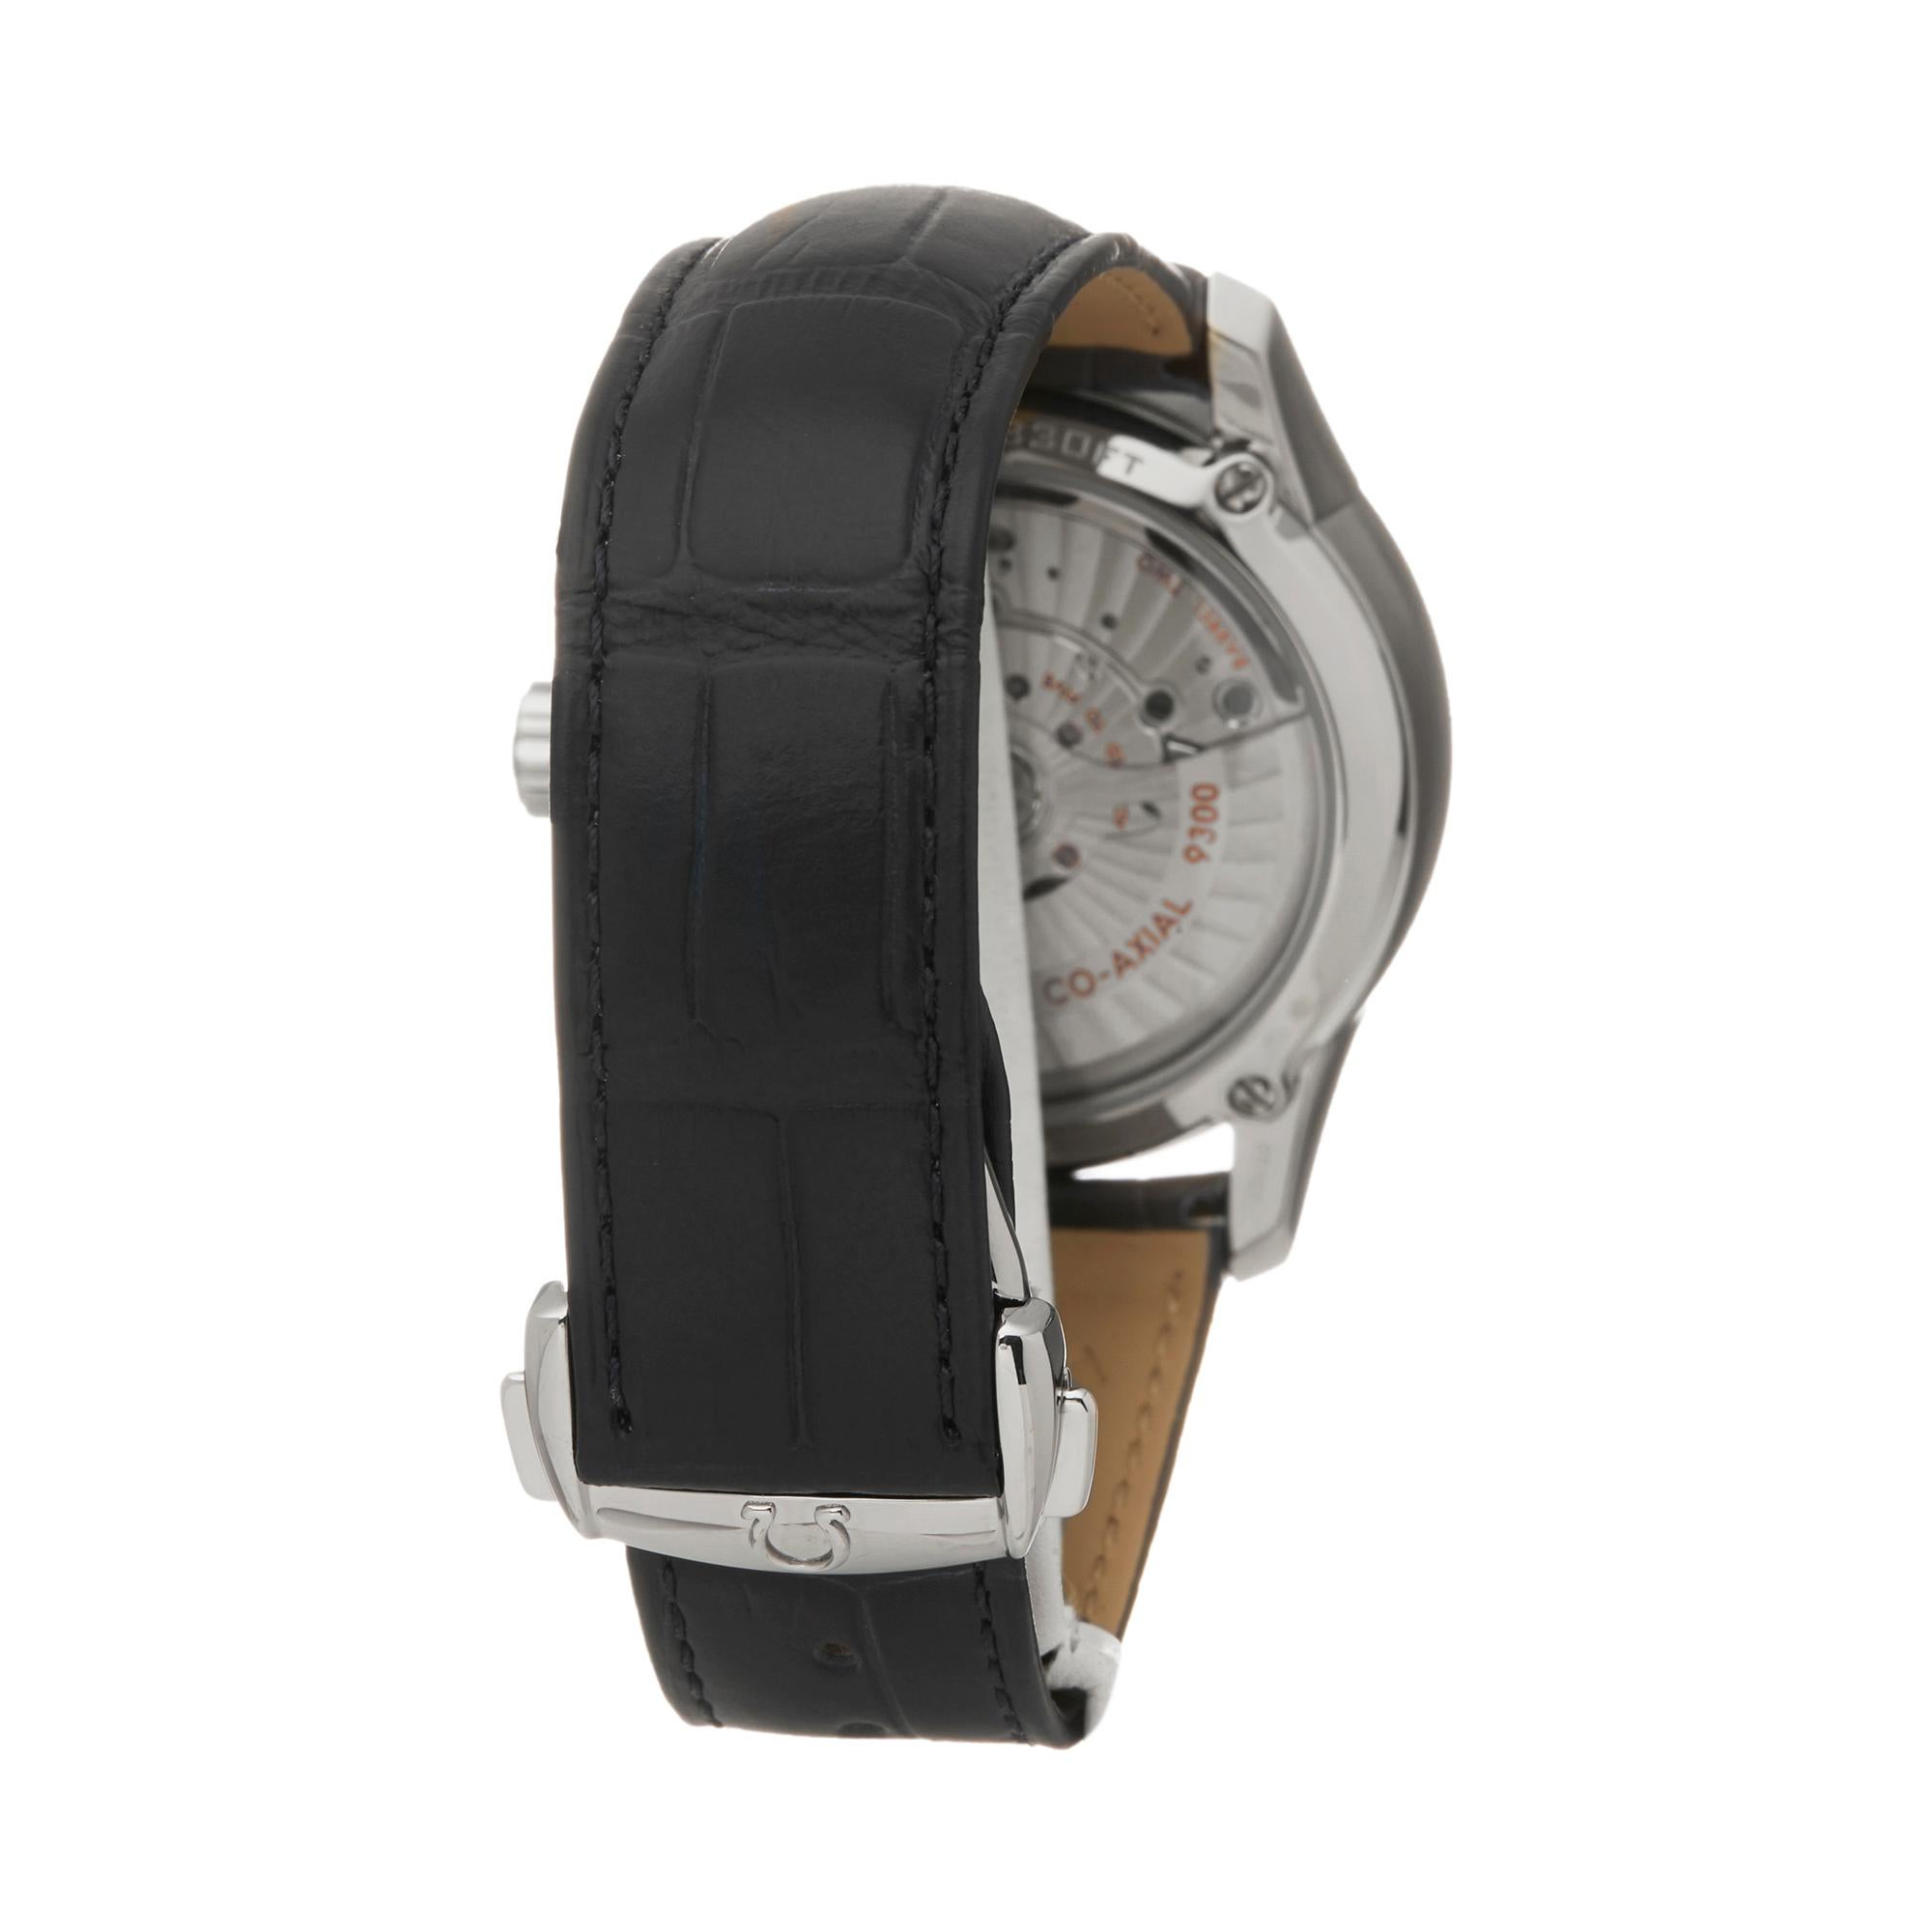 Omega DeVille Stainless Steel 431.13.42.51.03.001 Wristwatch 1